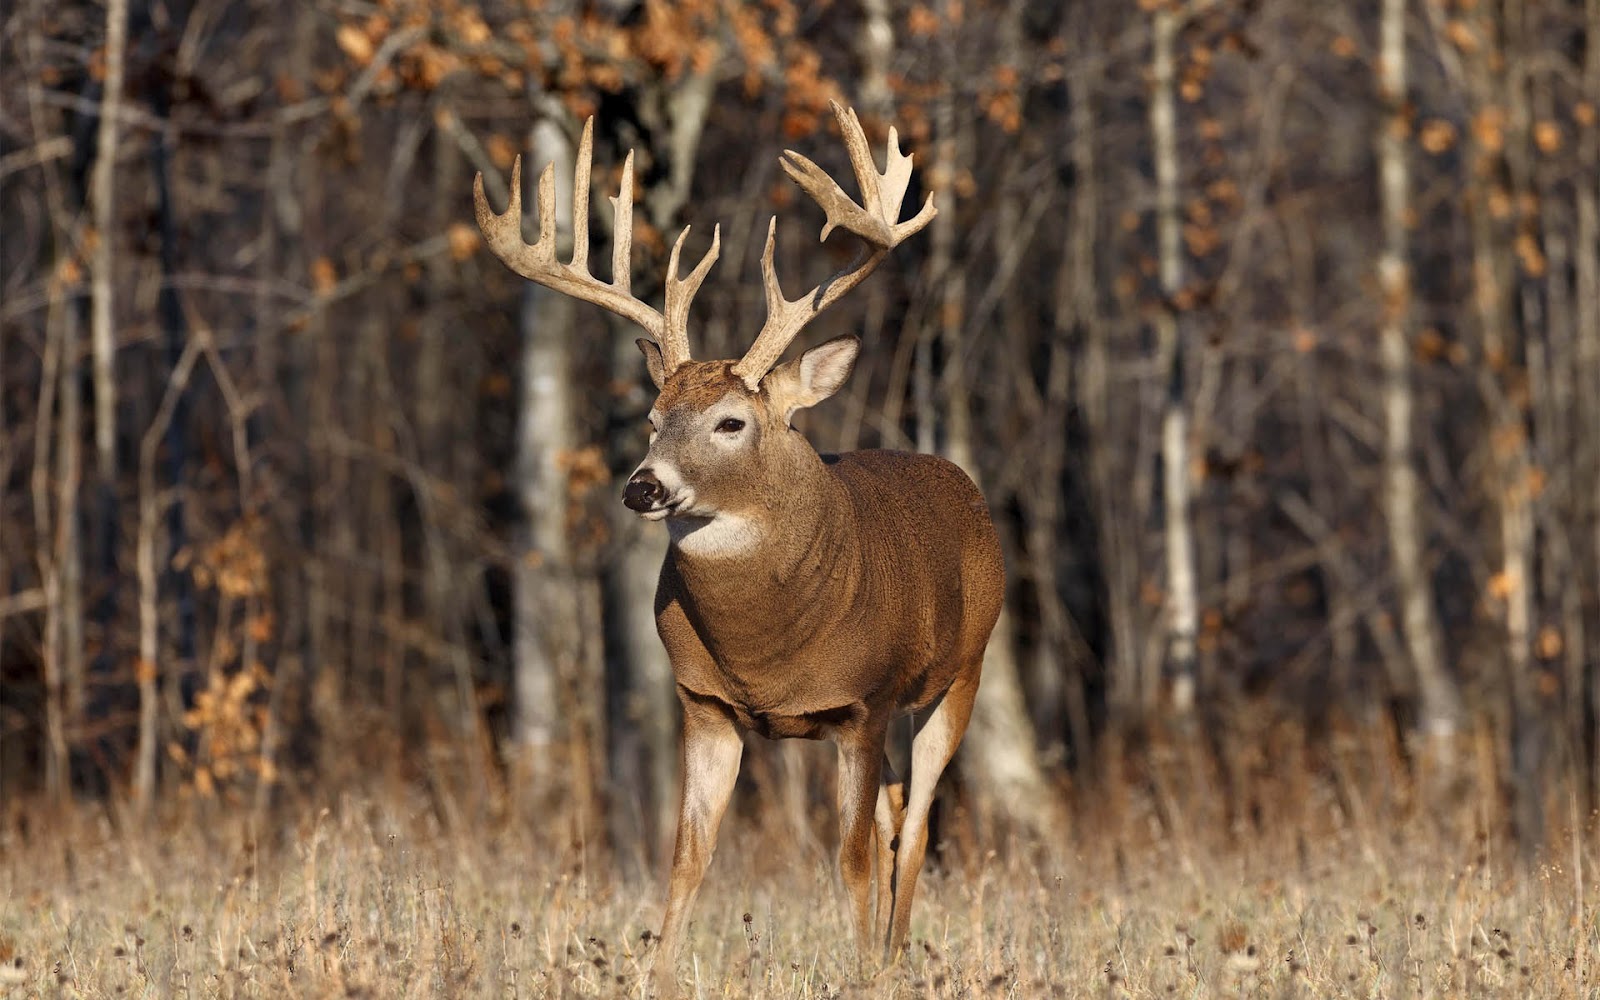 deer hunting backgrounds for computer